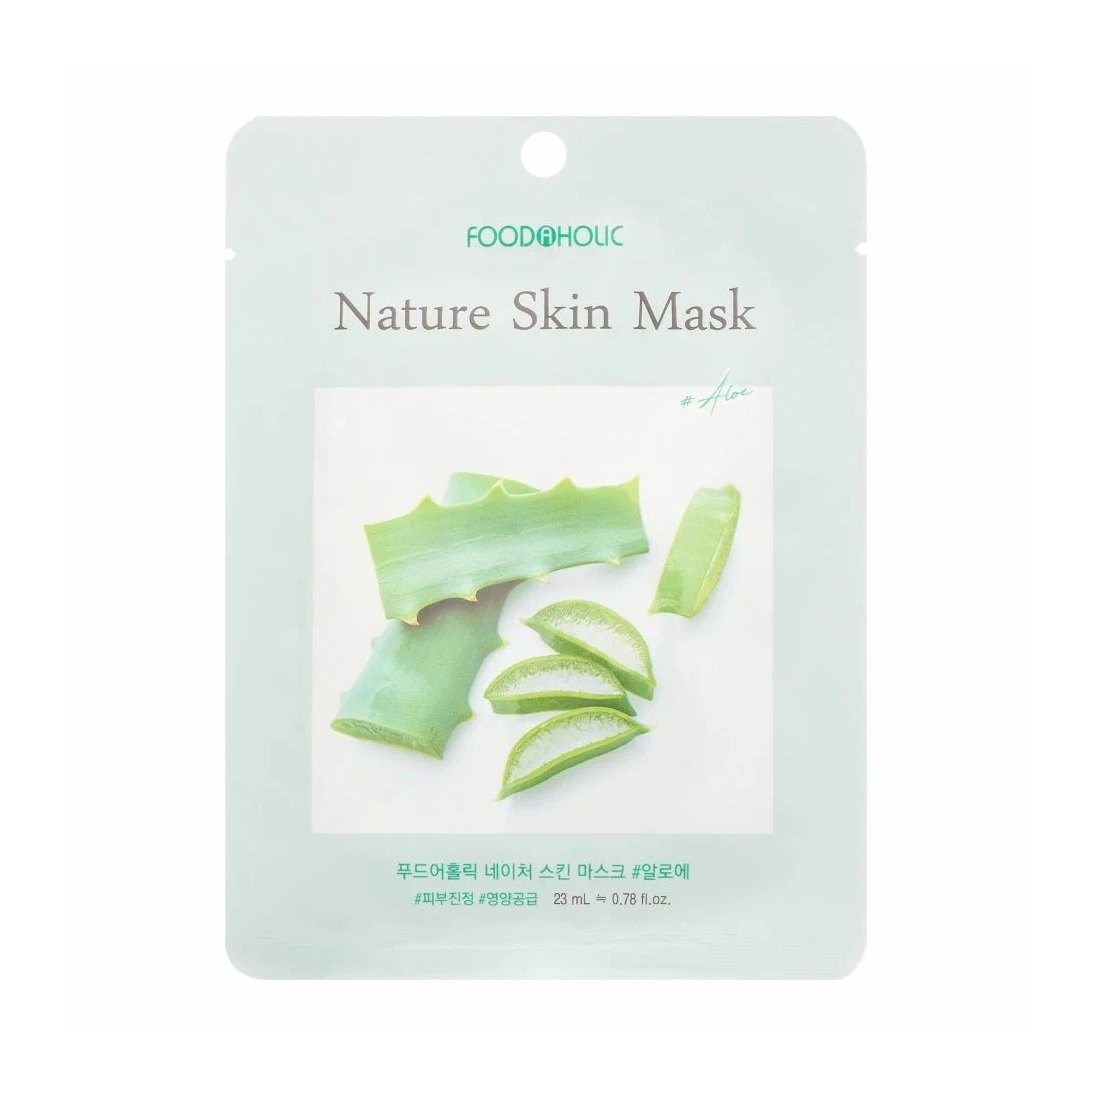 FOODAHOLIC, Тканевая маска для лица с экстрактом алоэ Nature Skin Mask, 25 гр.